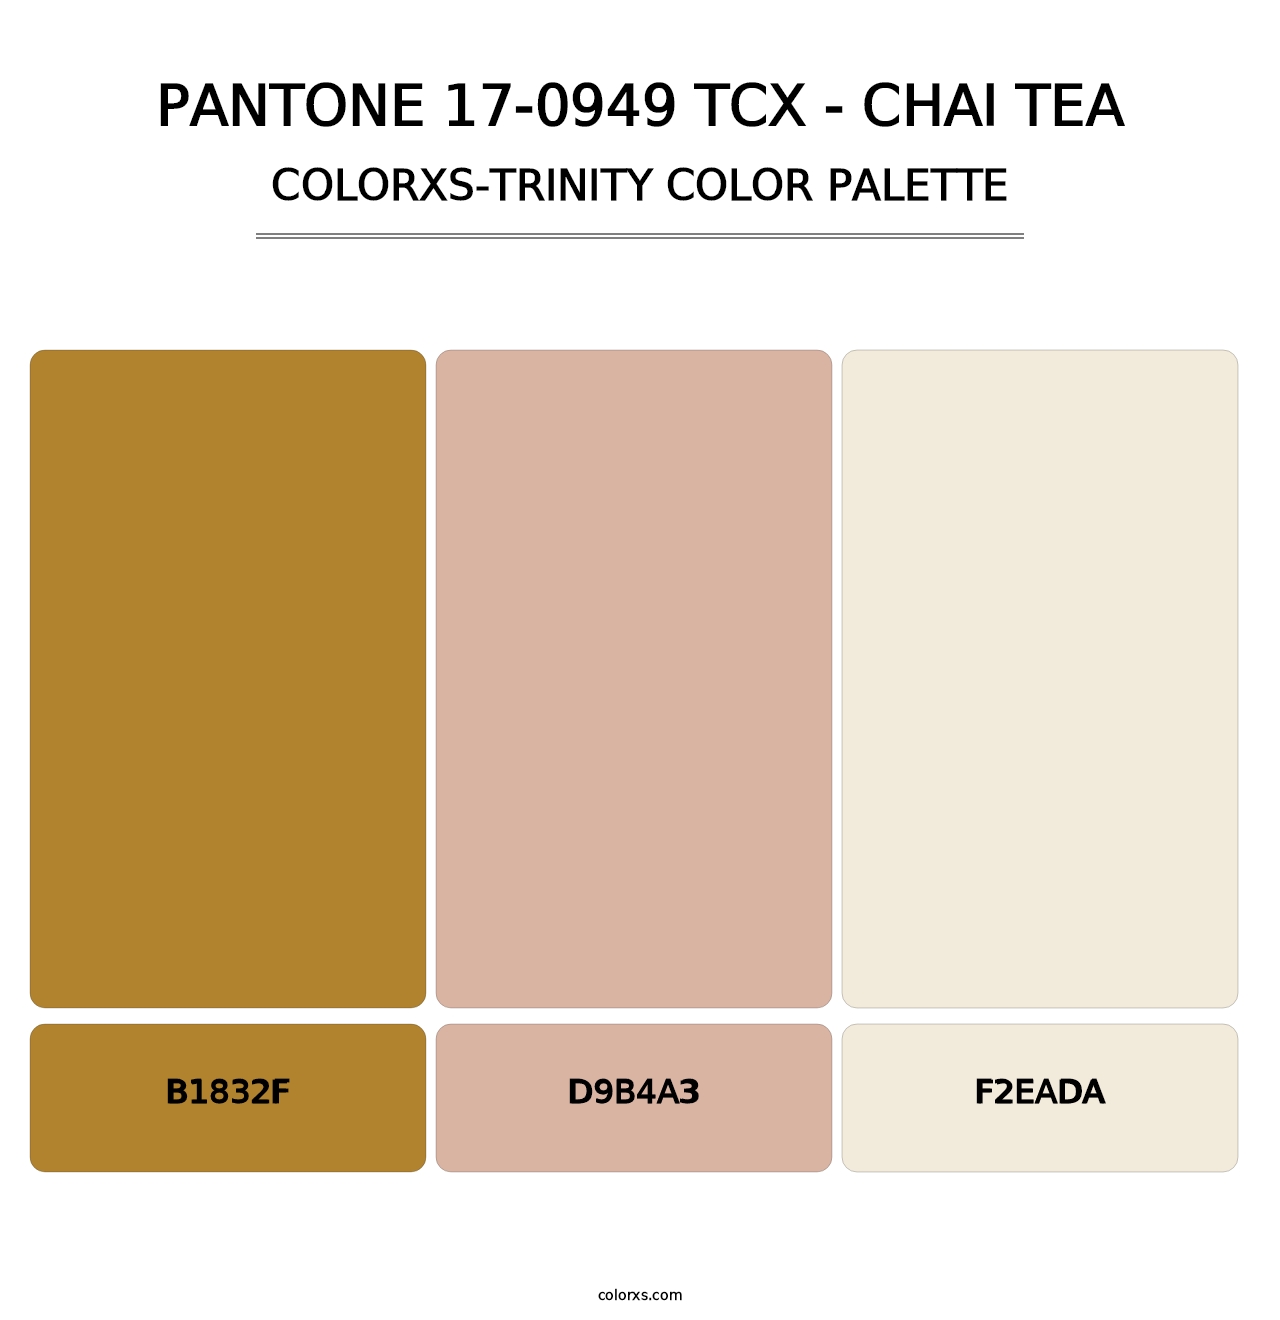 PANTONE 17-0949 TCX - Chai Tea - Colorxs Trinity Palette